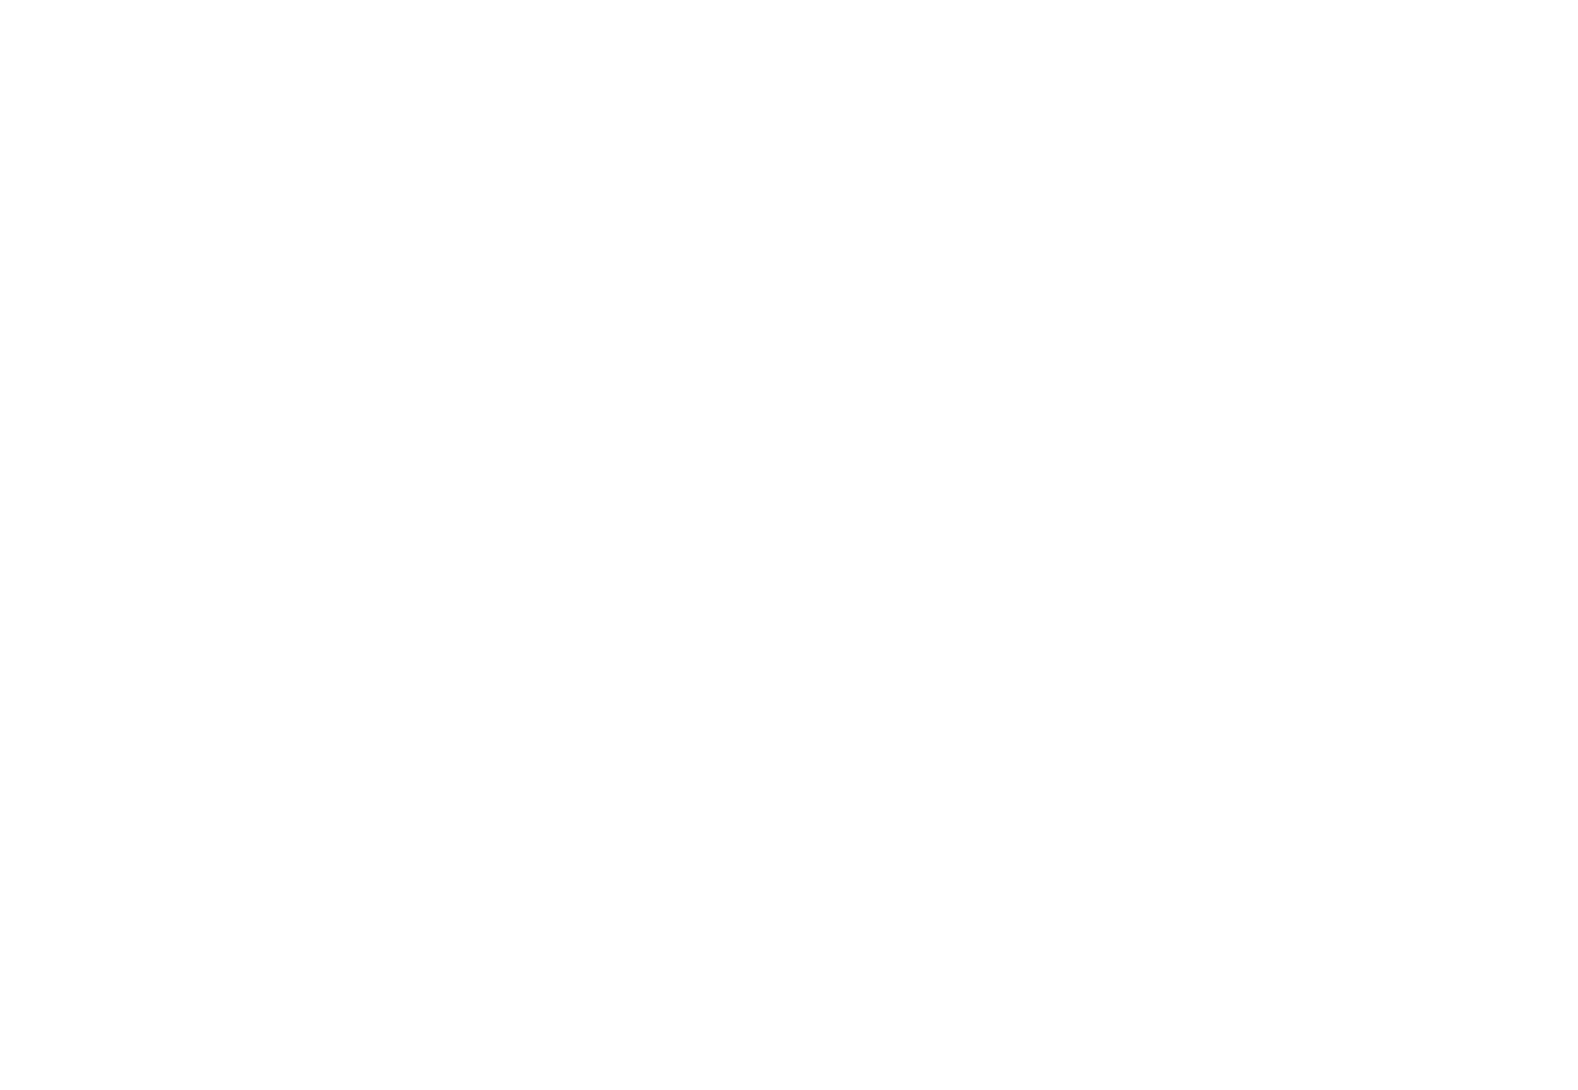 T&D Holdings logo large for dark backgrounds (transparent PNG)